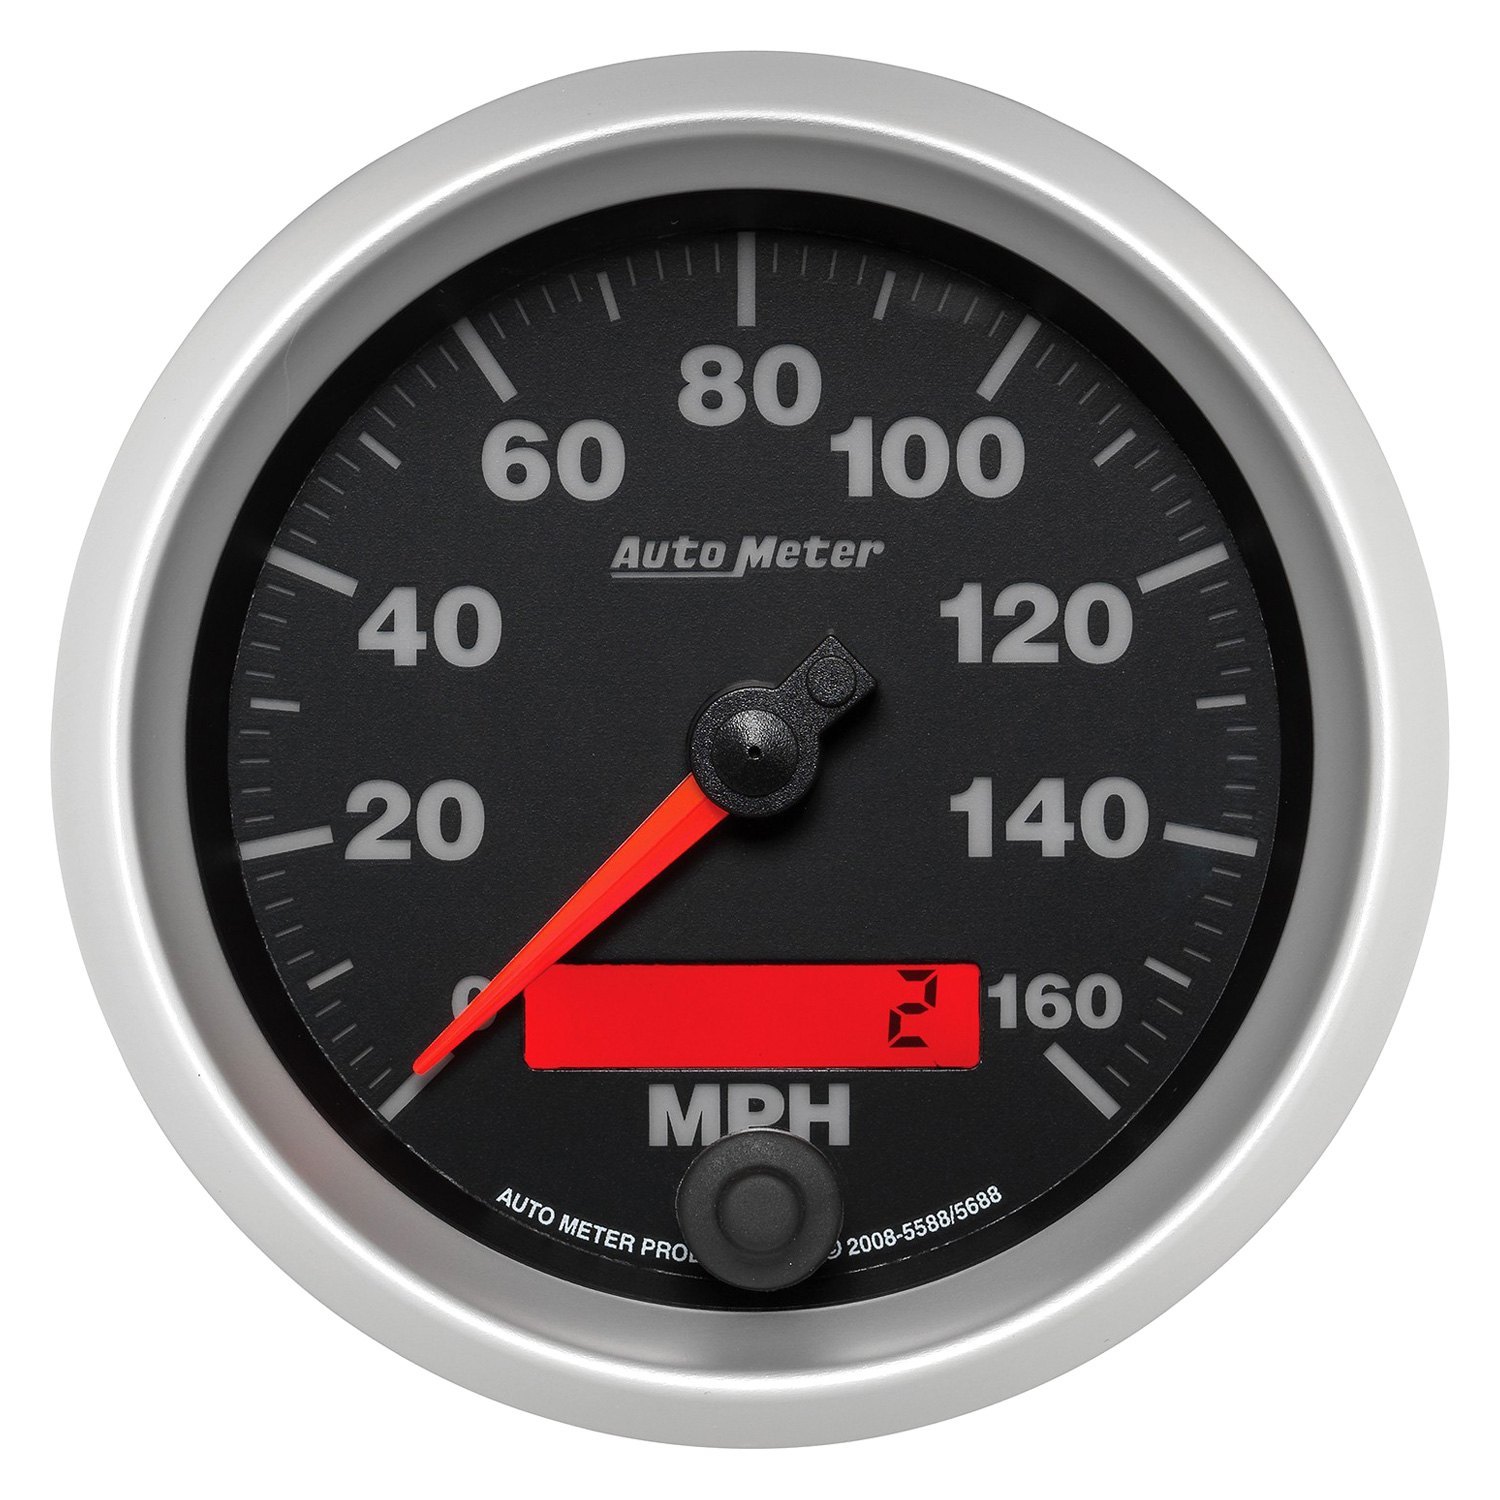 Auto Meter. Gauge Meter. Air Core Meter Driver. Auto Meter logo.